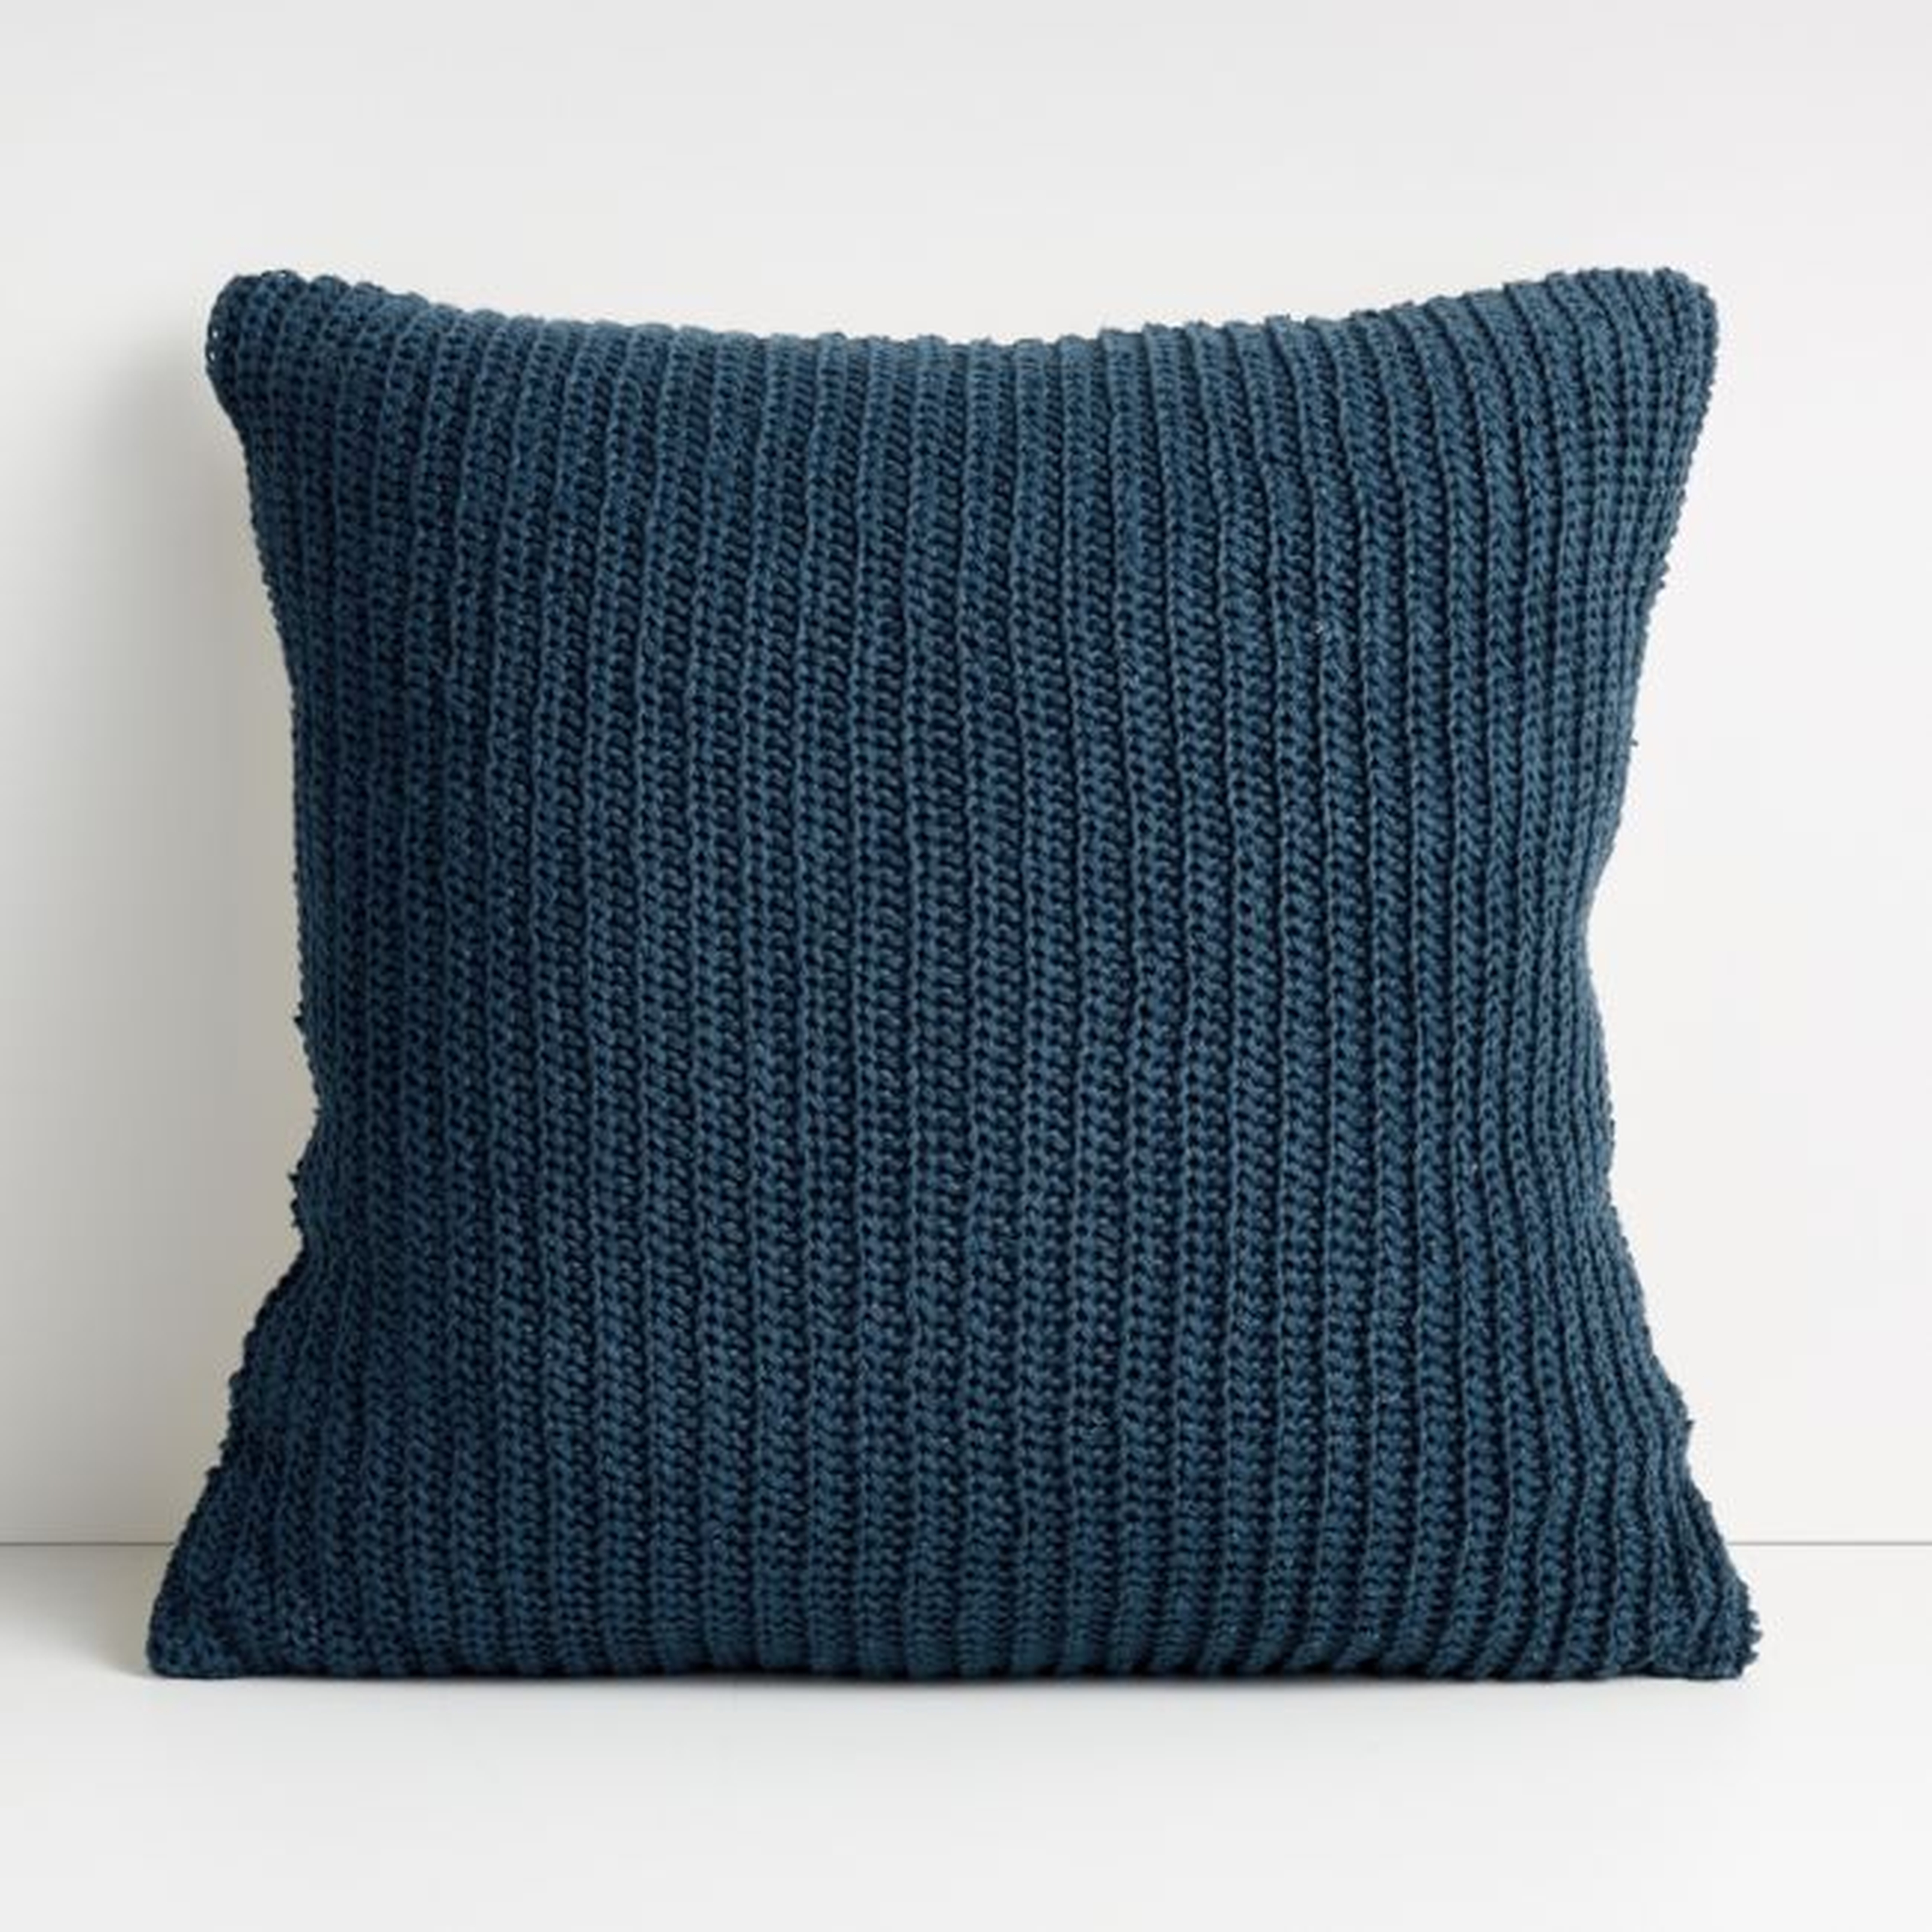 Croft 20" Insignia Blue Crochet Pillow Cover - Crate and Barrel